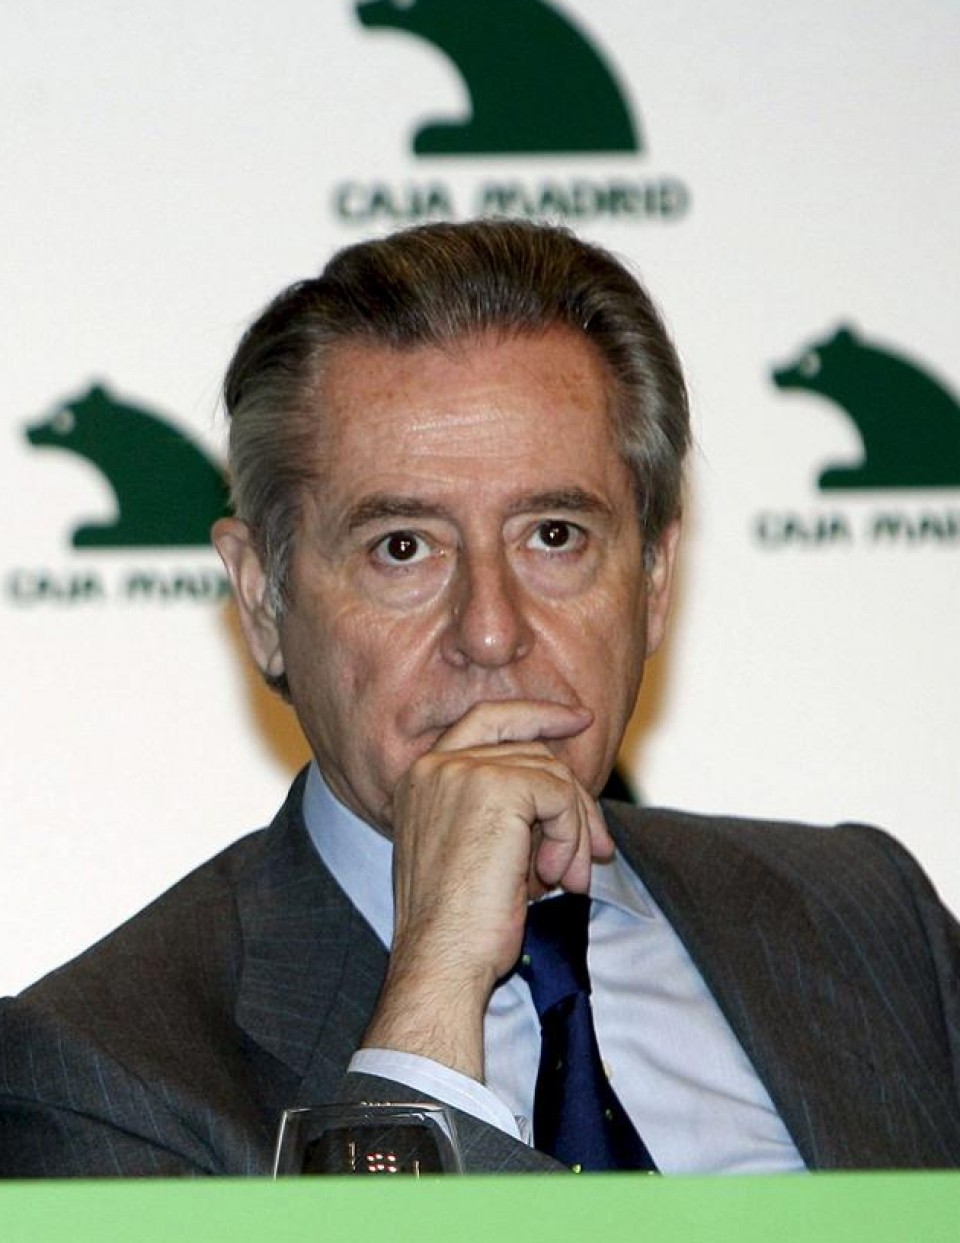 Miguel Blesa Caja Madrideko presidente ohia